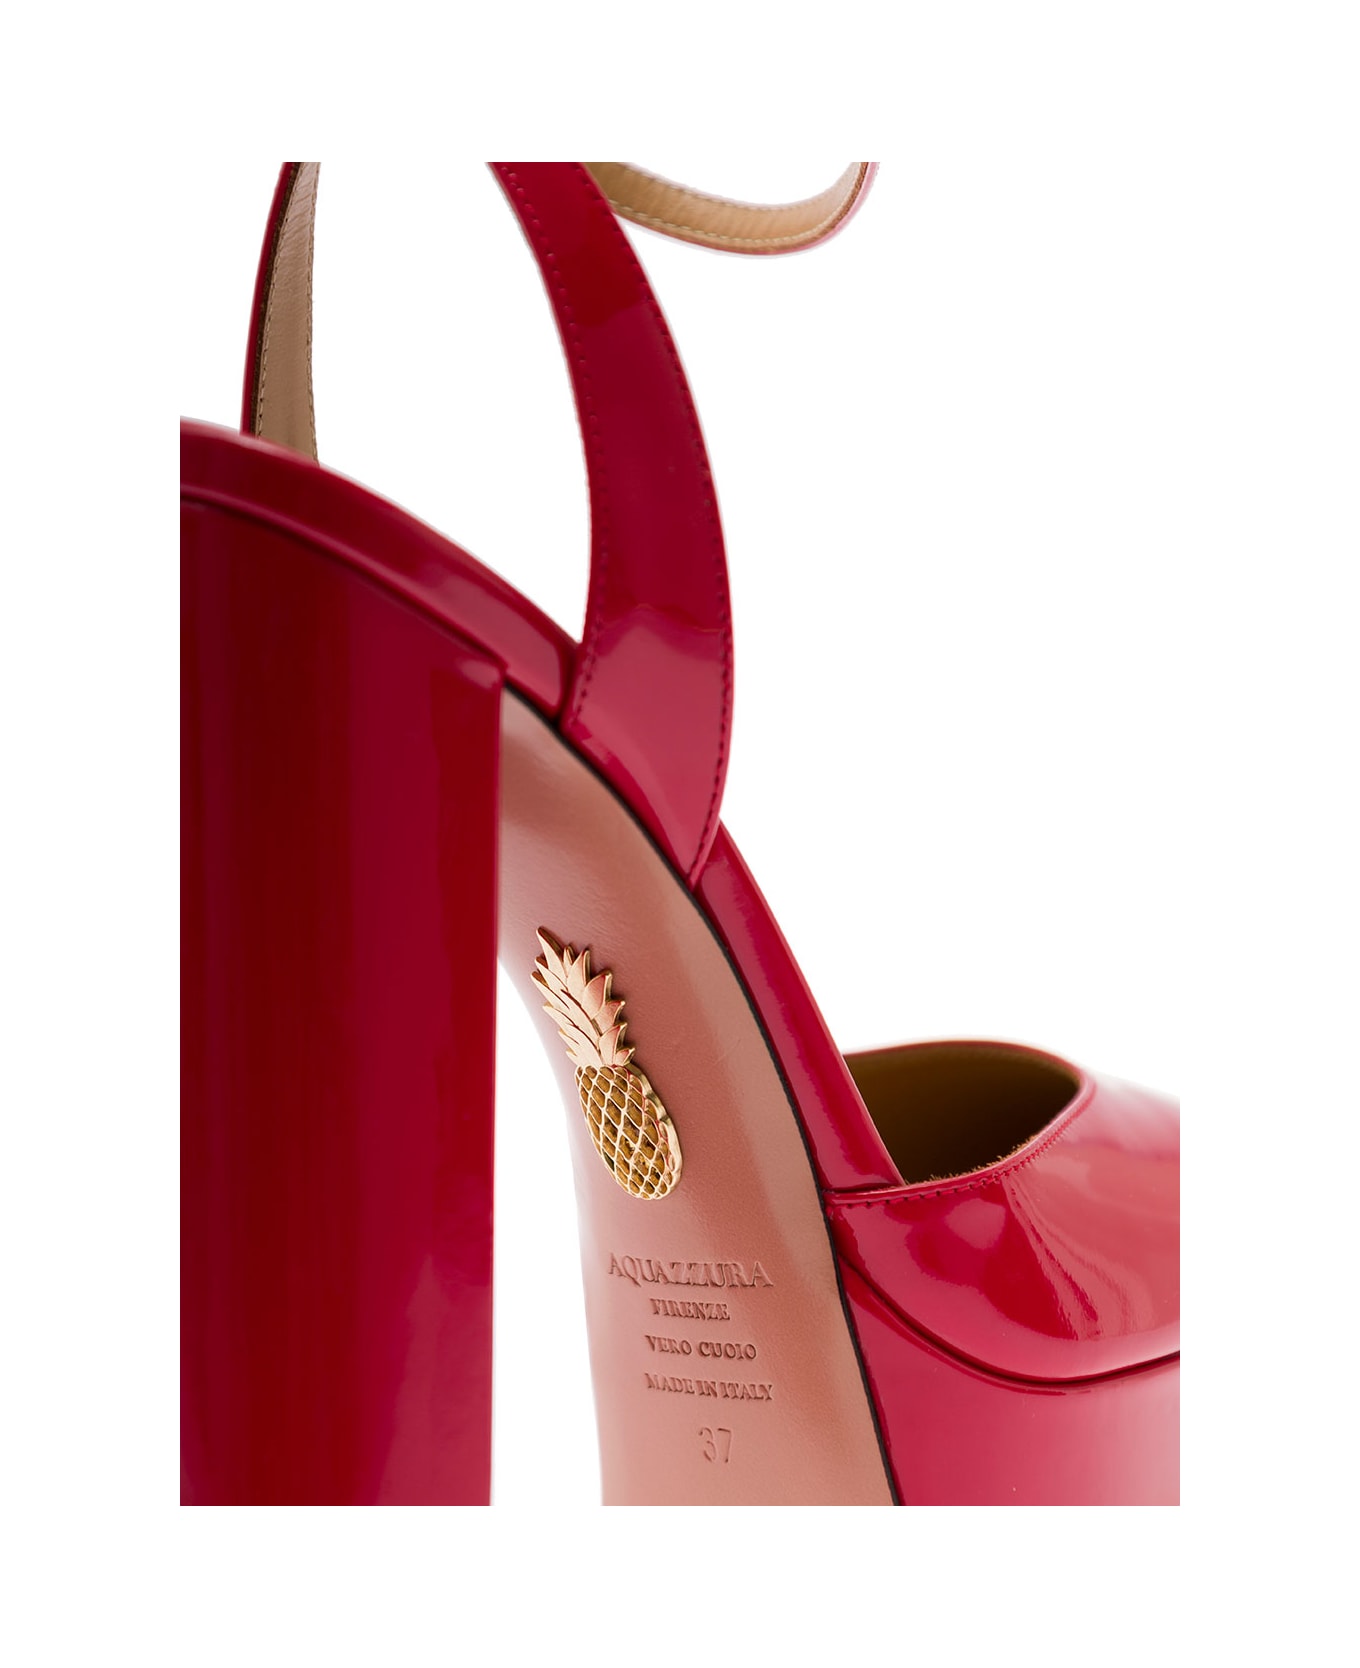 Aquazzura 'so High Plateau' Red Platform Sandals In Glossy Patent Leather Woman Aquazzura - Red